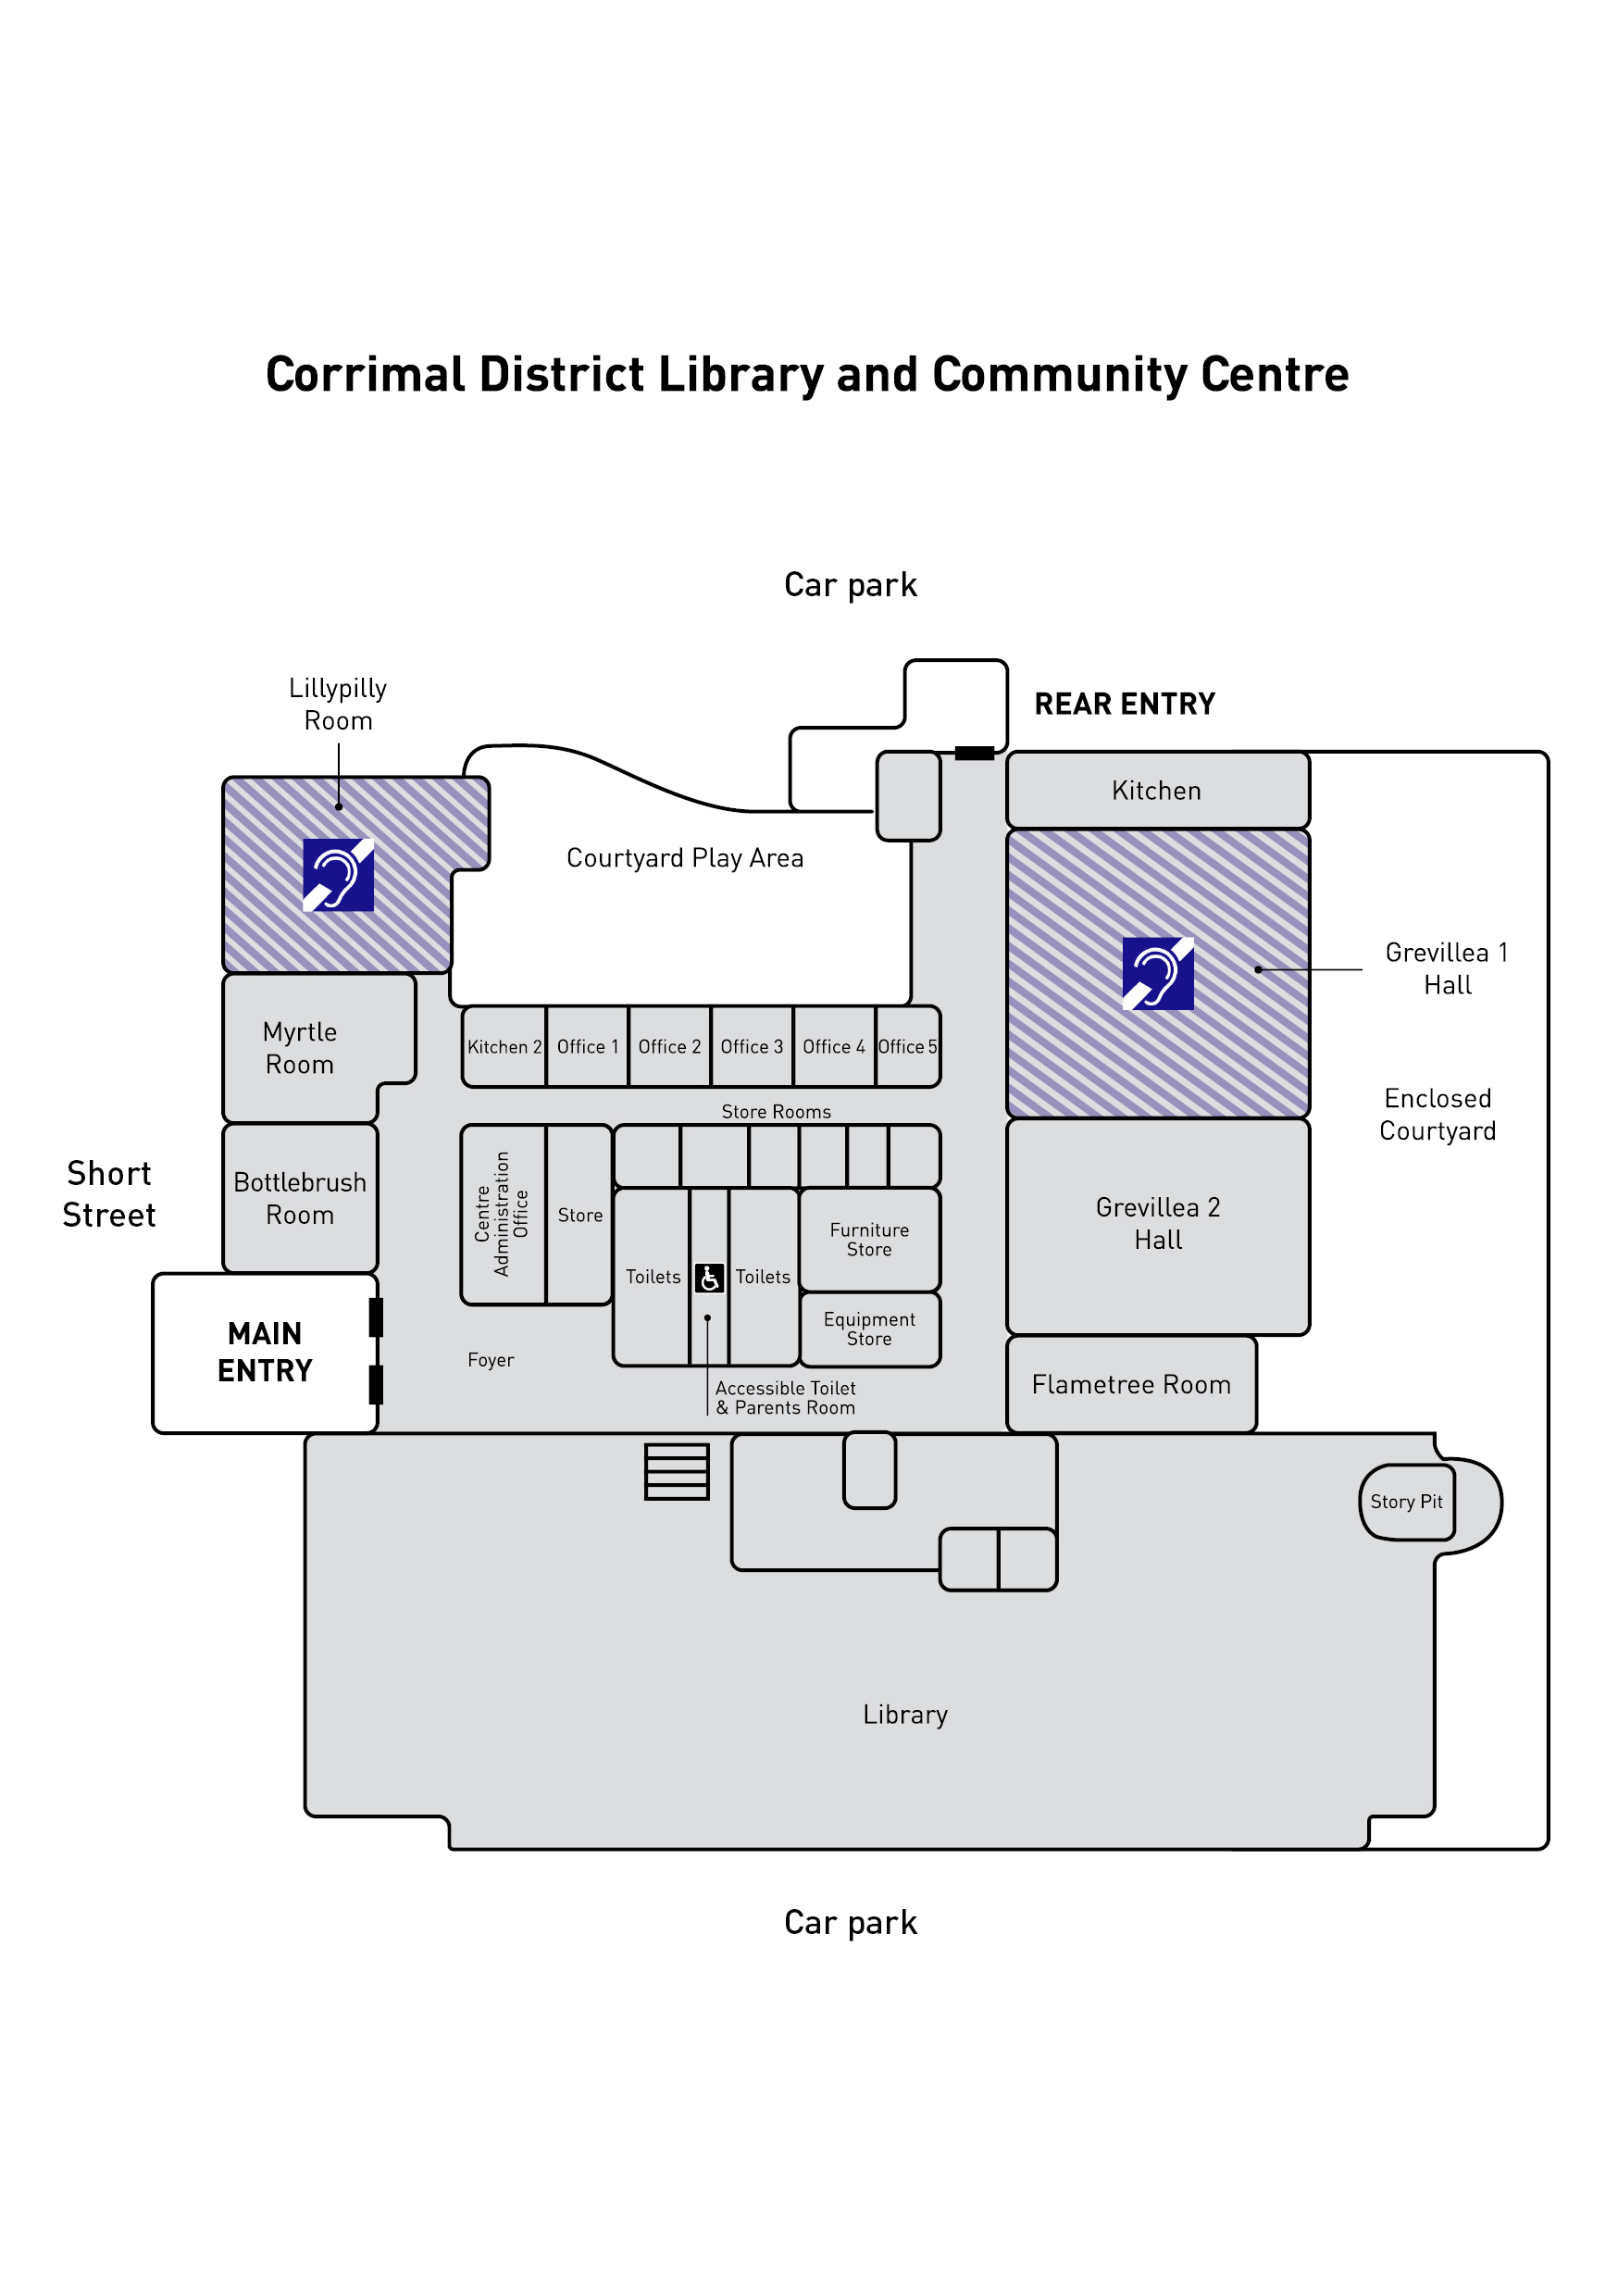 Corrimal LCC Floorplan